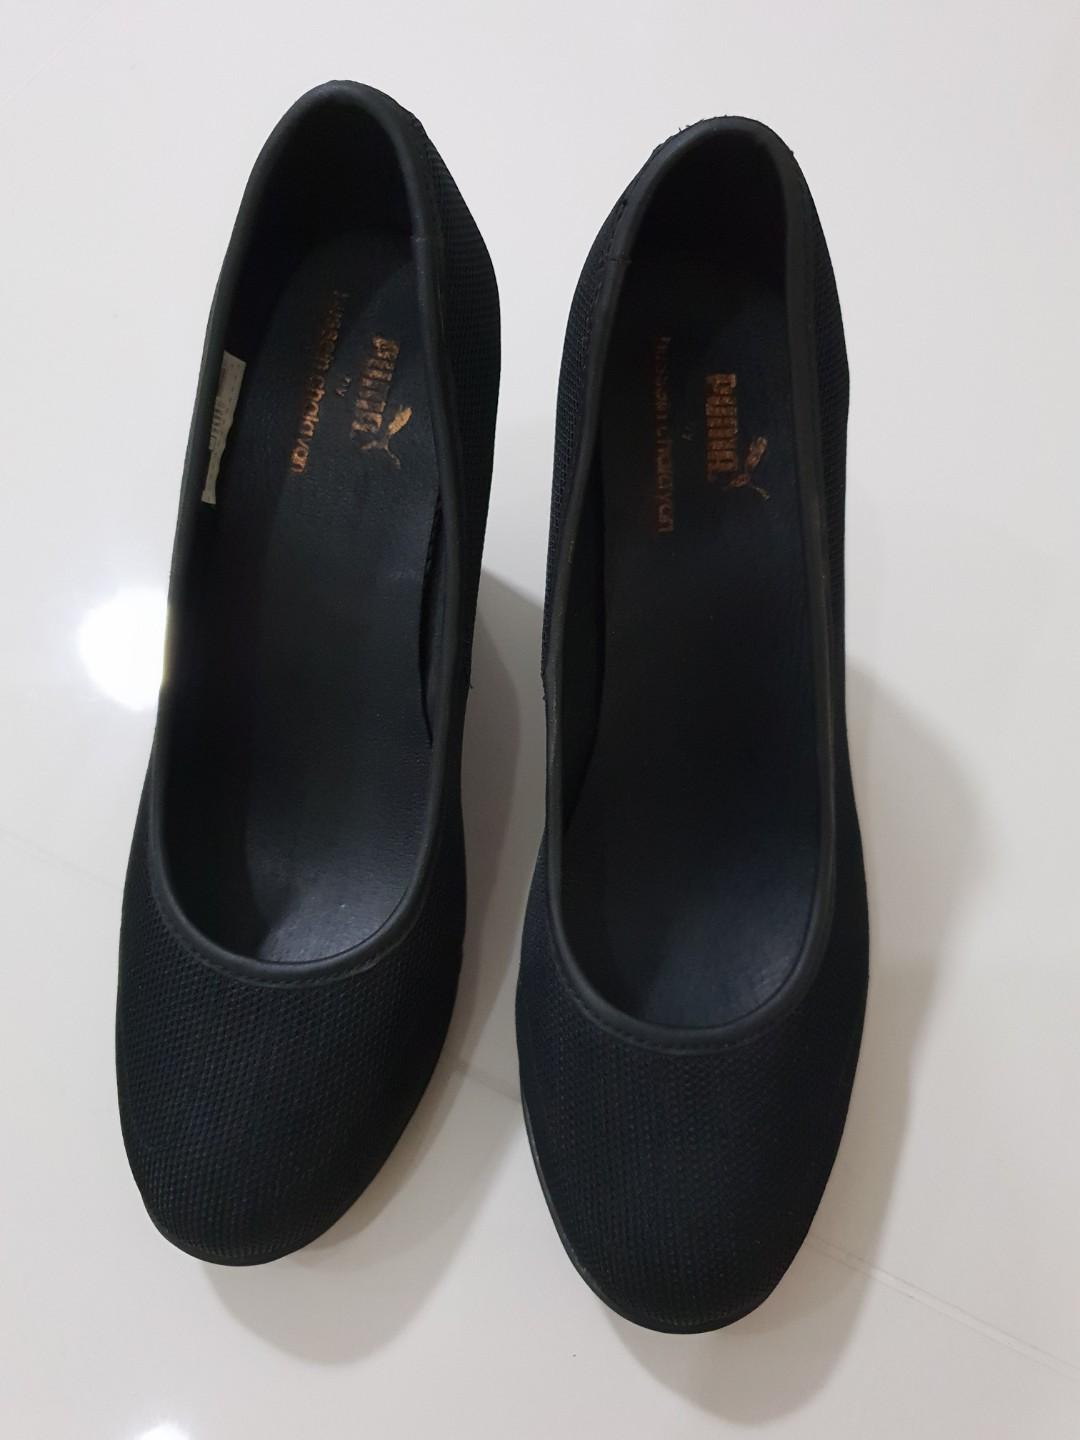 puma black shoes price